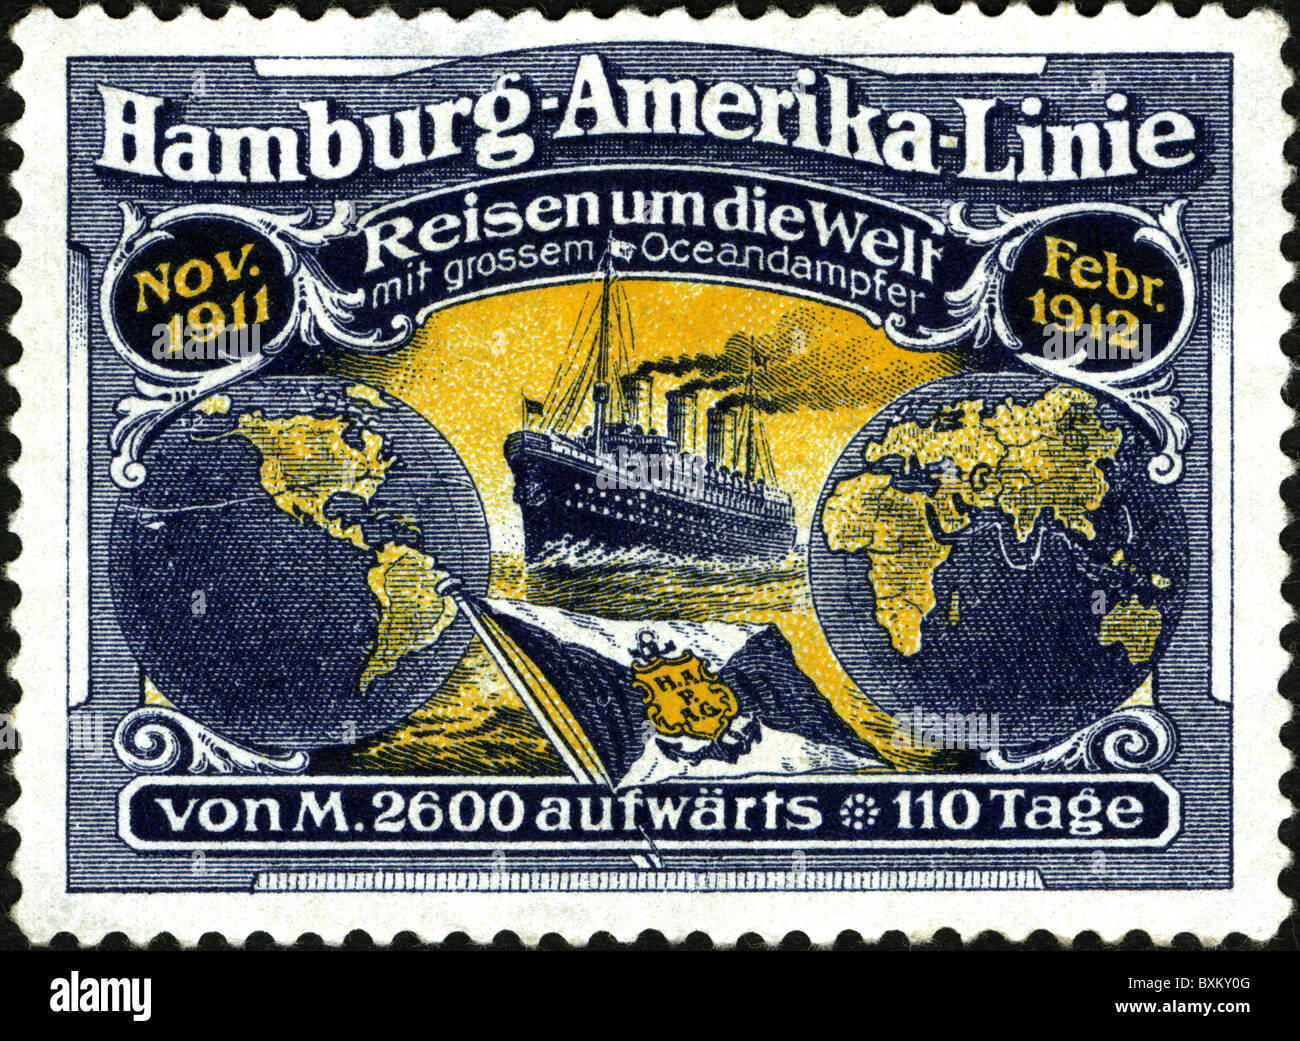 Transport / Transport, Navigation, Reedereien, Hamburg-America Line, Plakatstempel, Hamburg, Deutschland, 1911, Additional-Rights-Clearences-not available Stockfoto